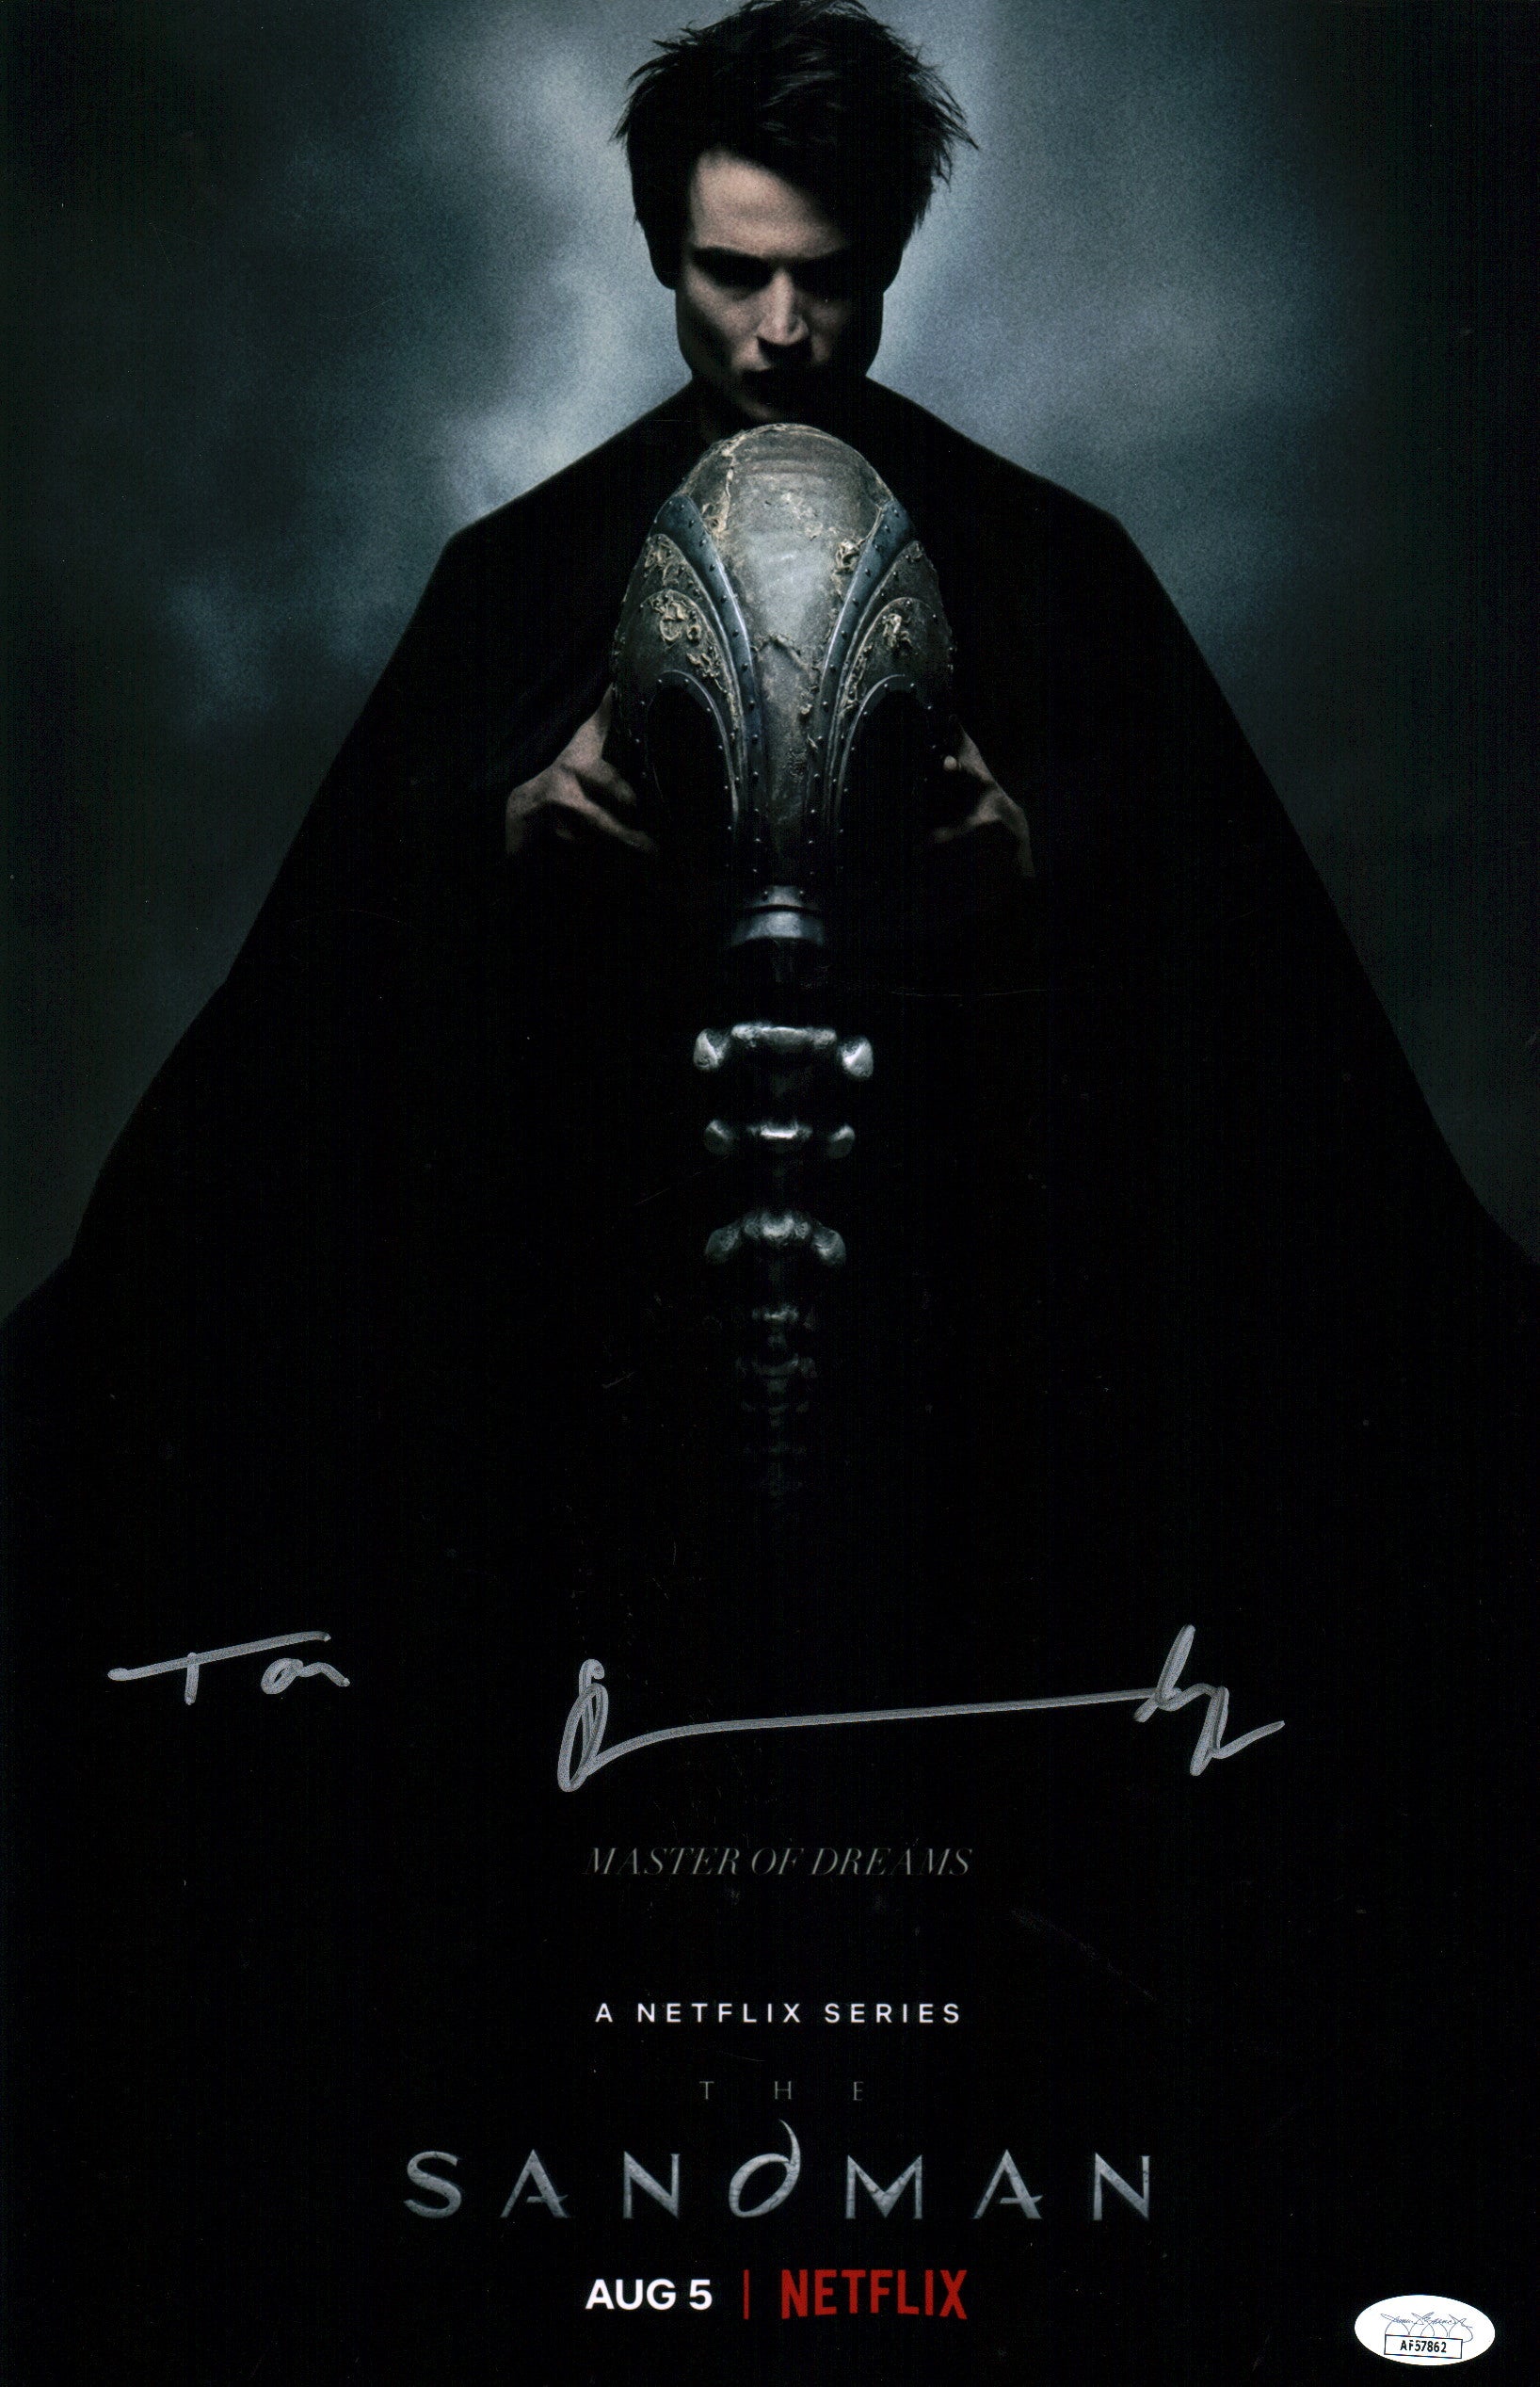 Tom Sturridge The Sandman 11x17 Signed Photo Poster JSA Certified Autograph